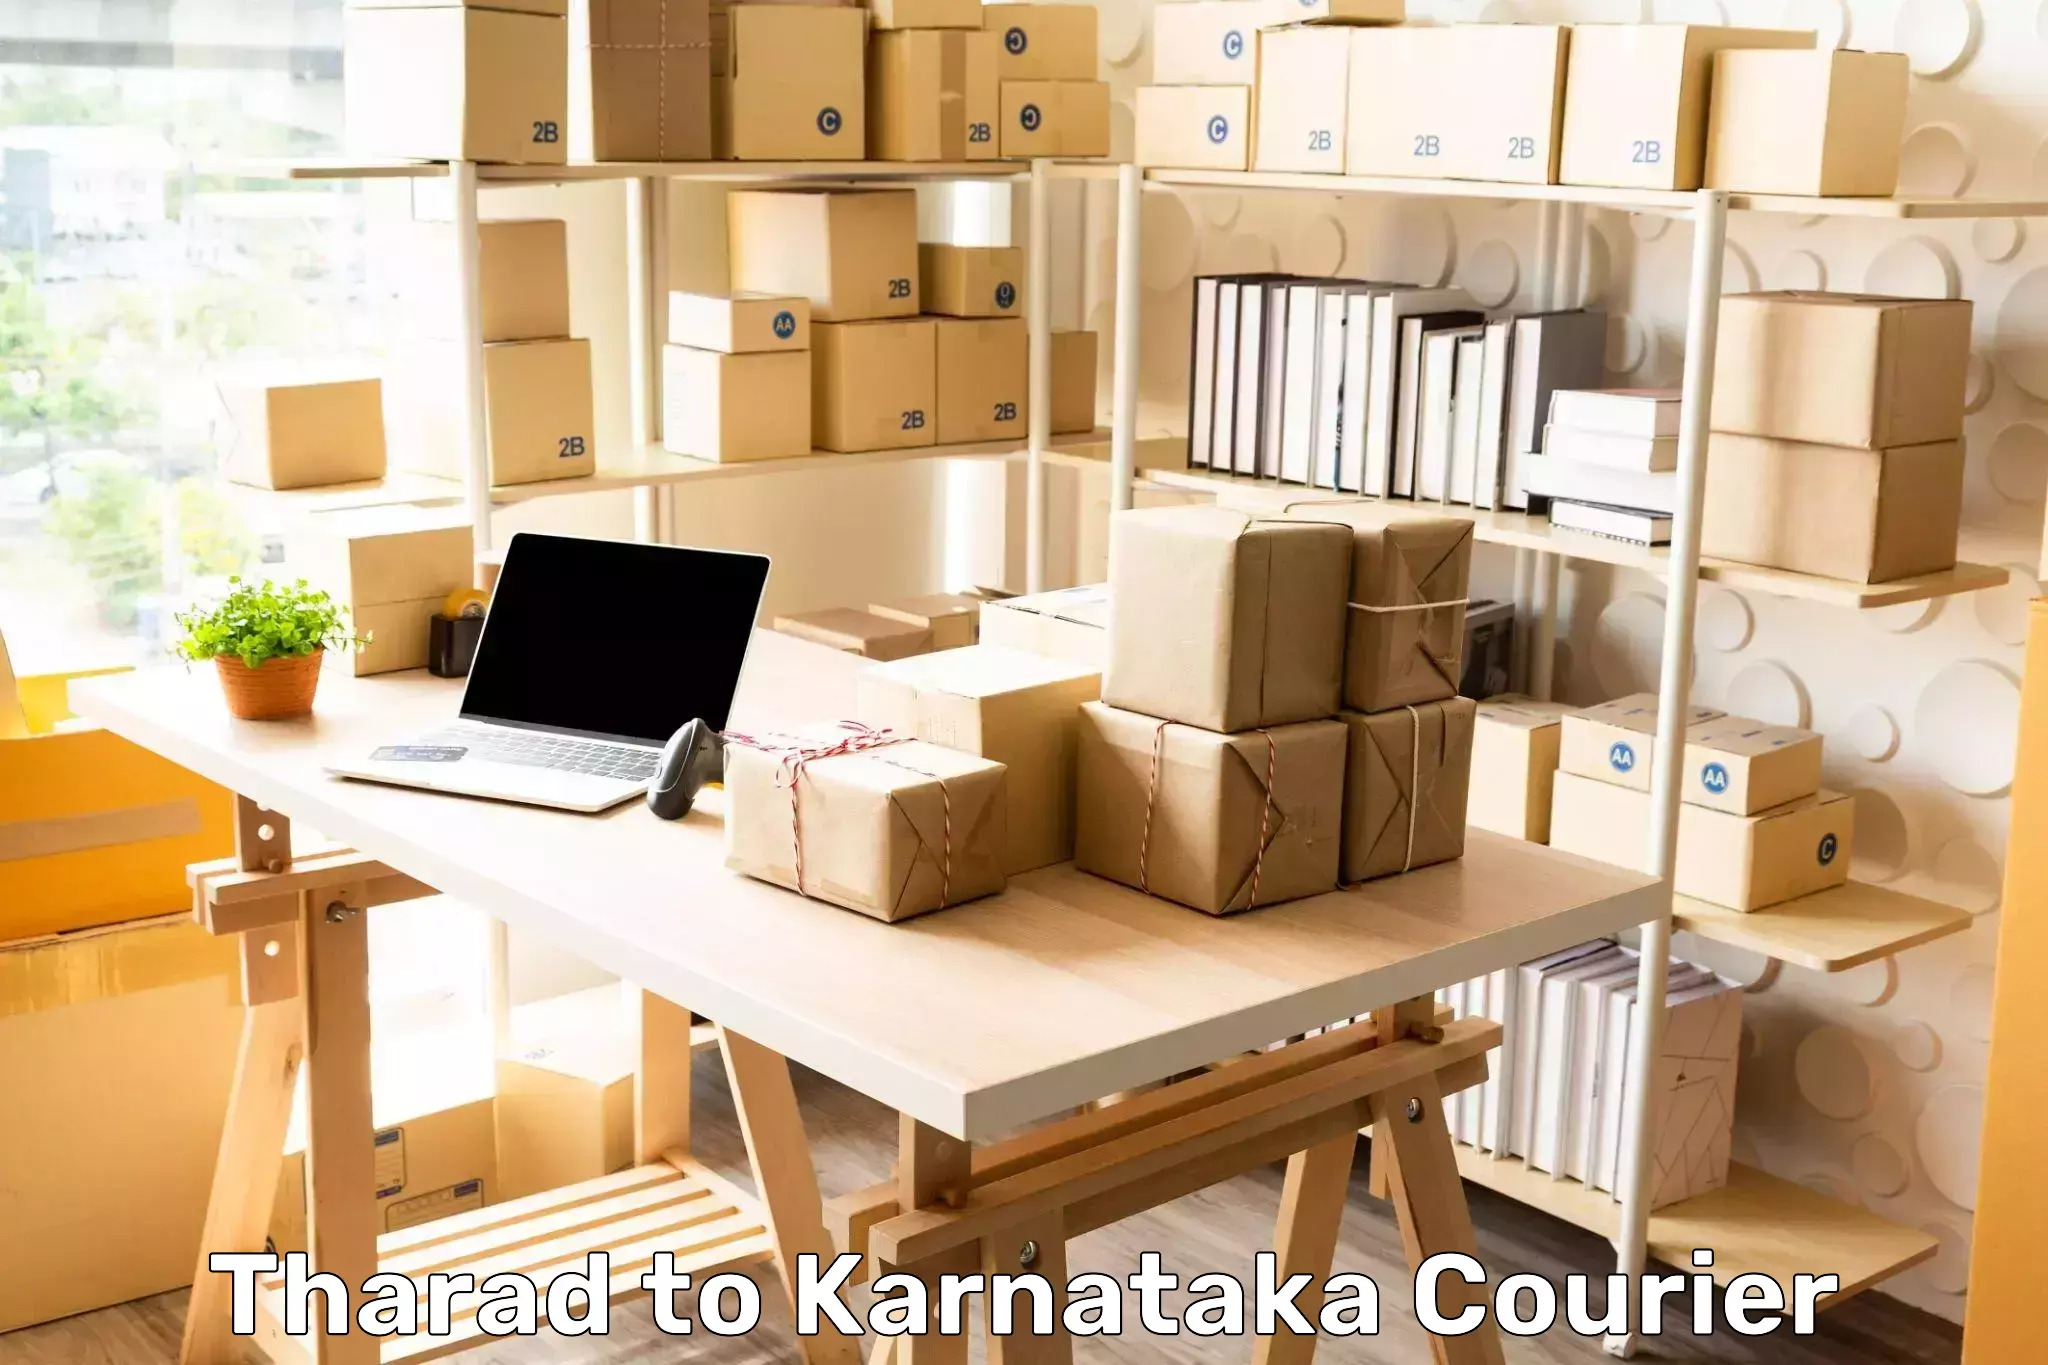 Courier app Tharad to Karnataka